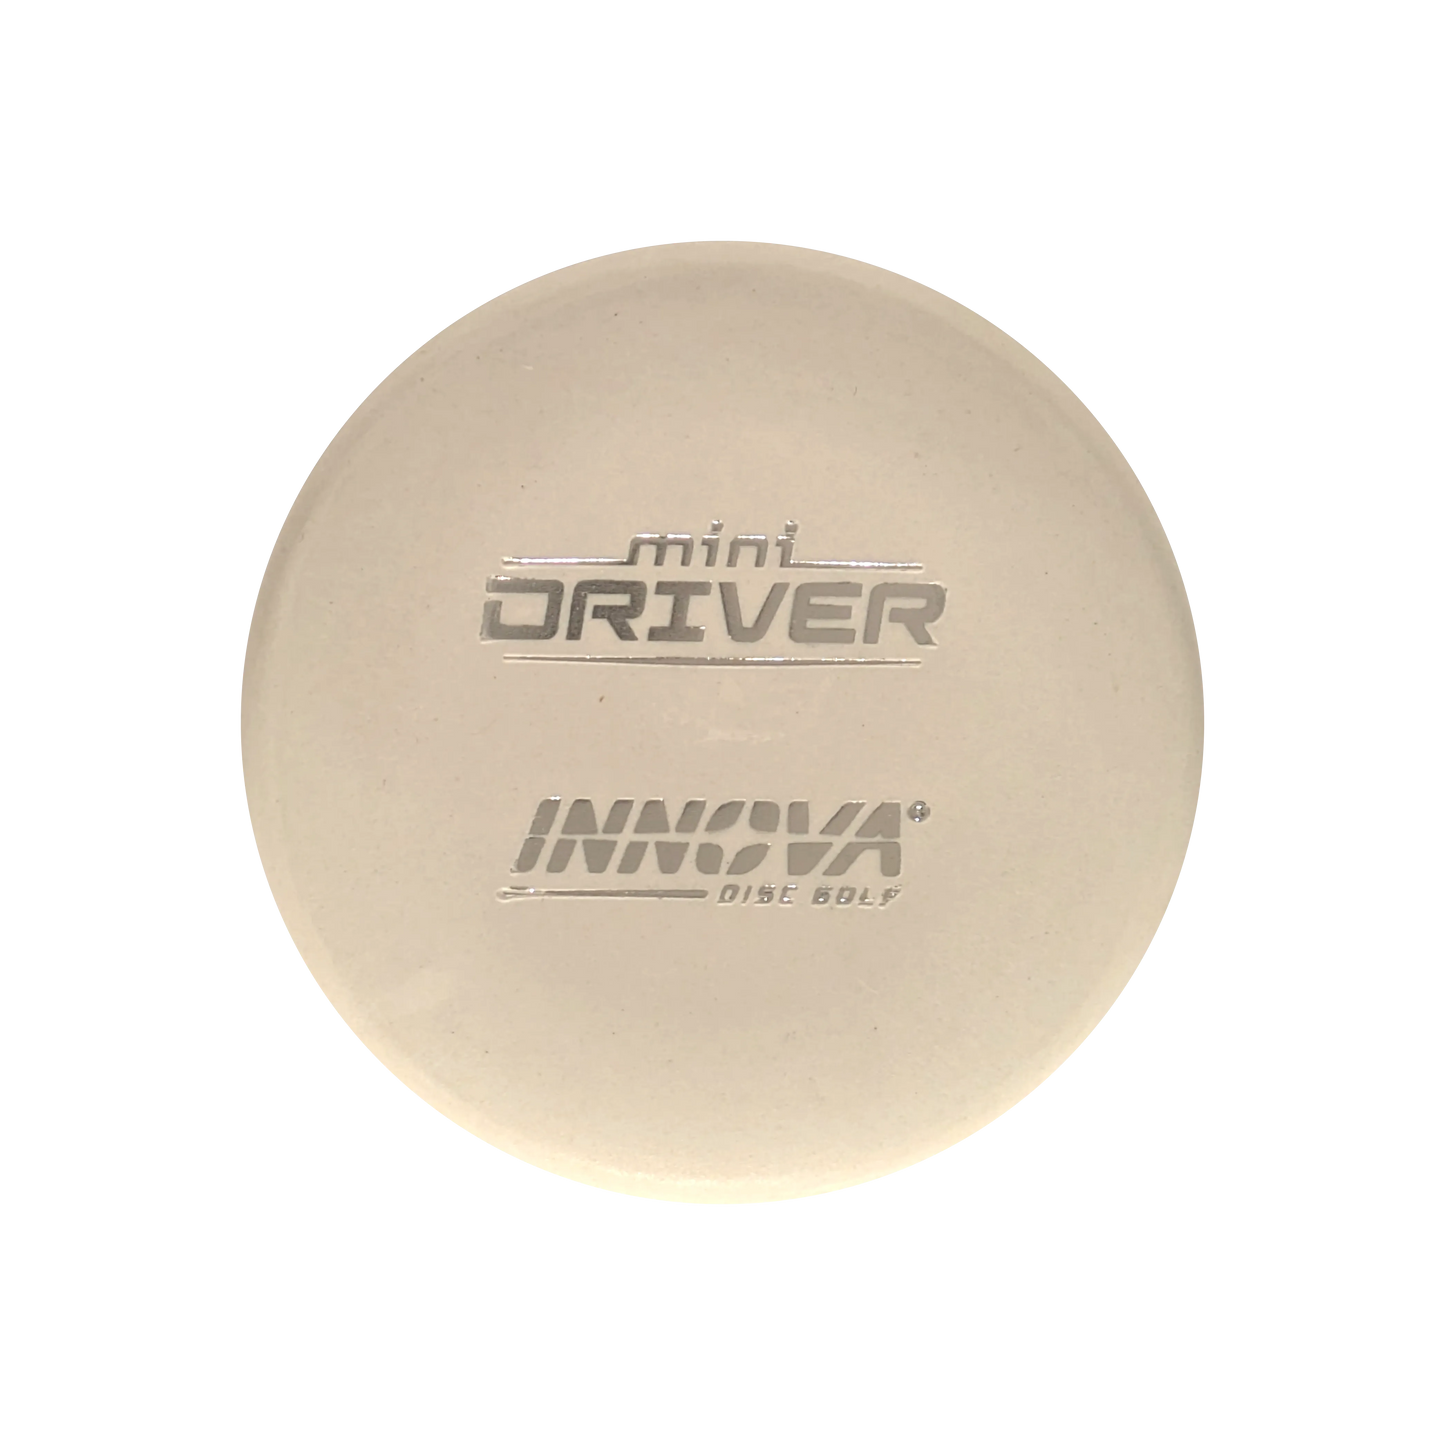 Innova Mini Marker Driver